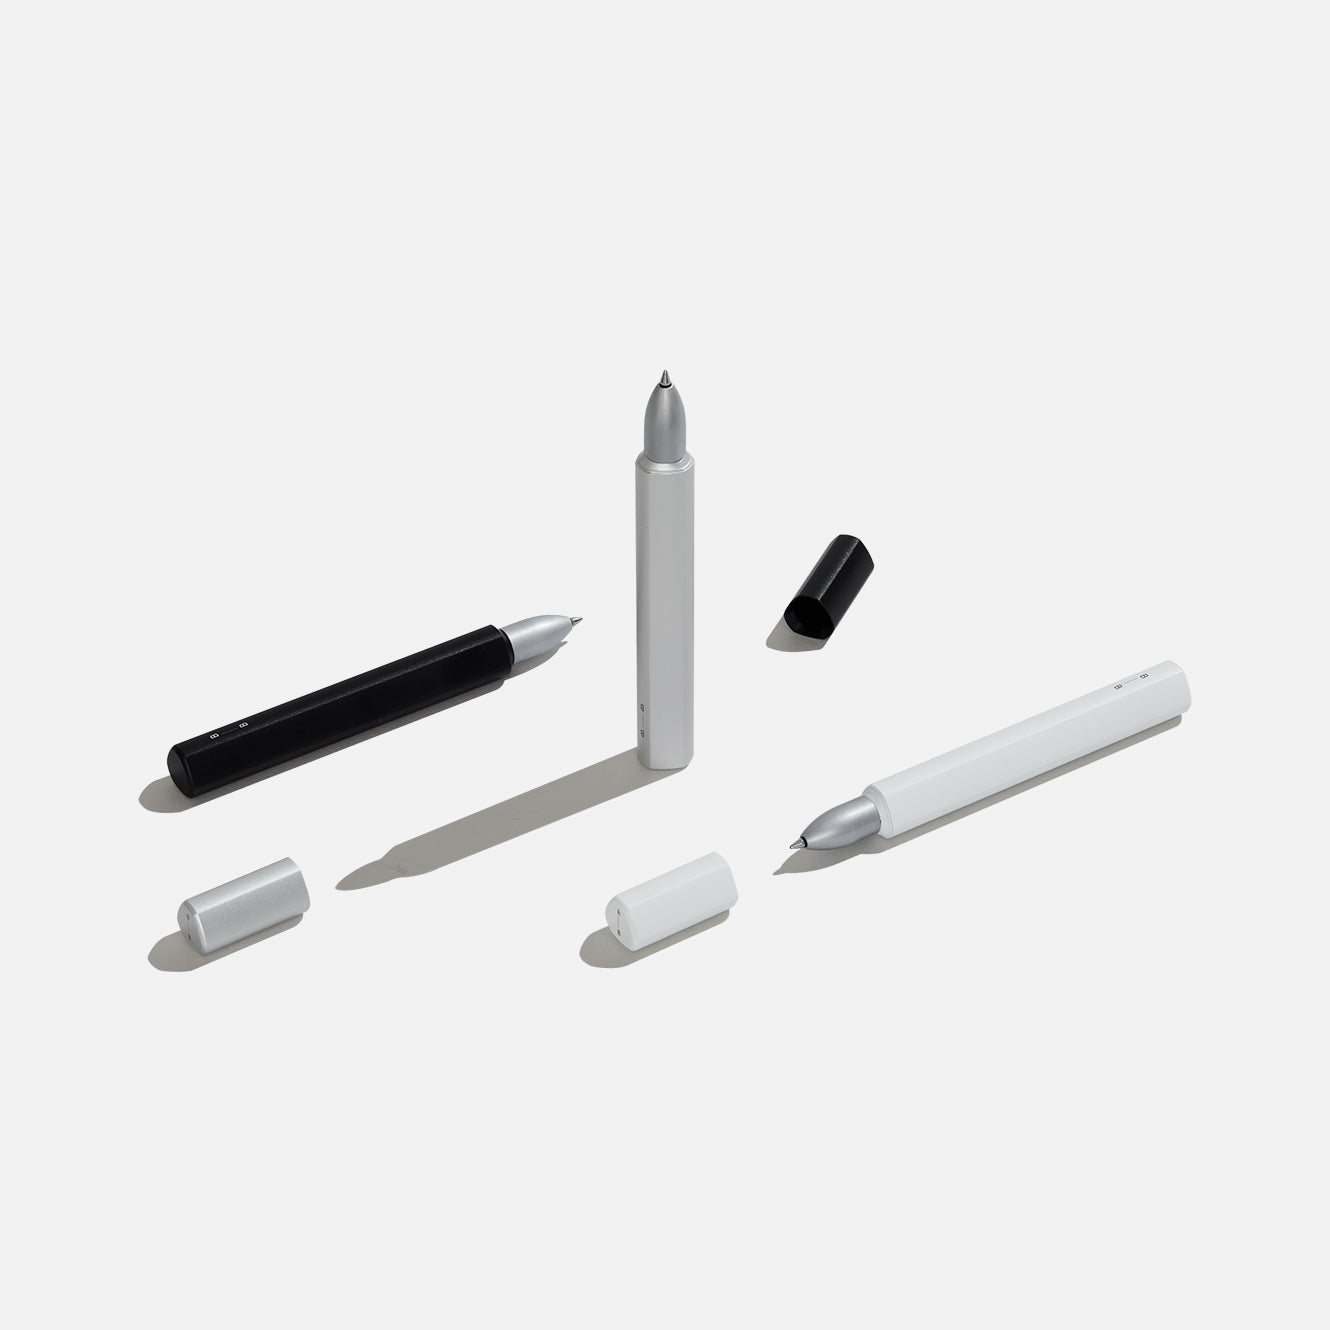 Before breakfast annodised beadblast aluminium premium rollerball pen in silver and in white and black